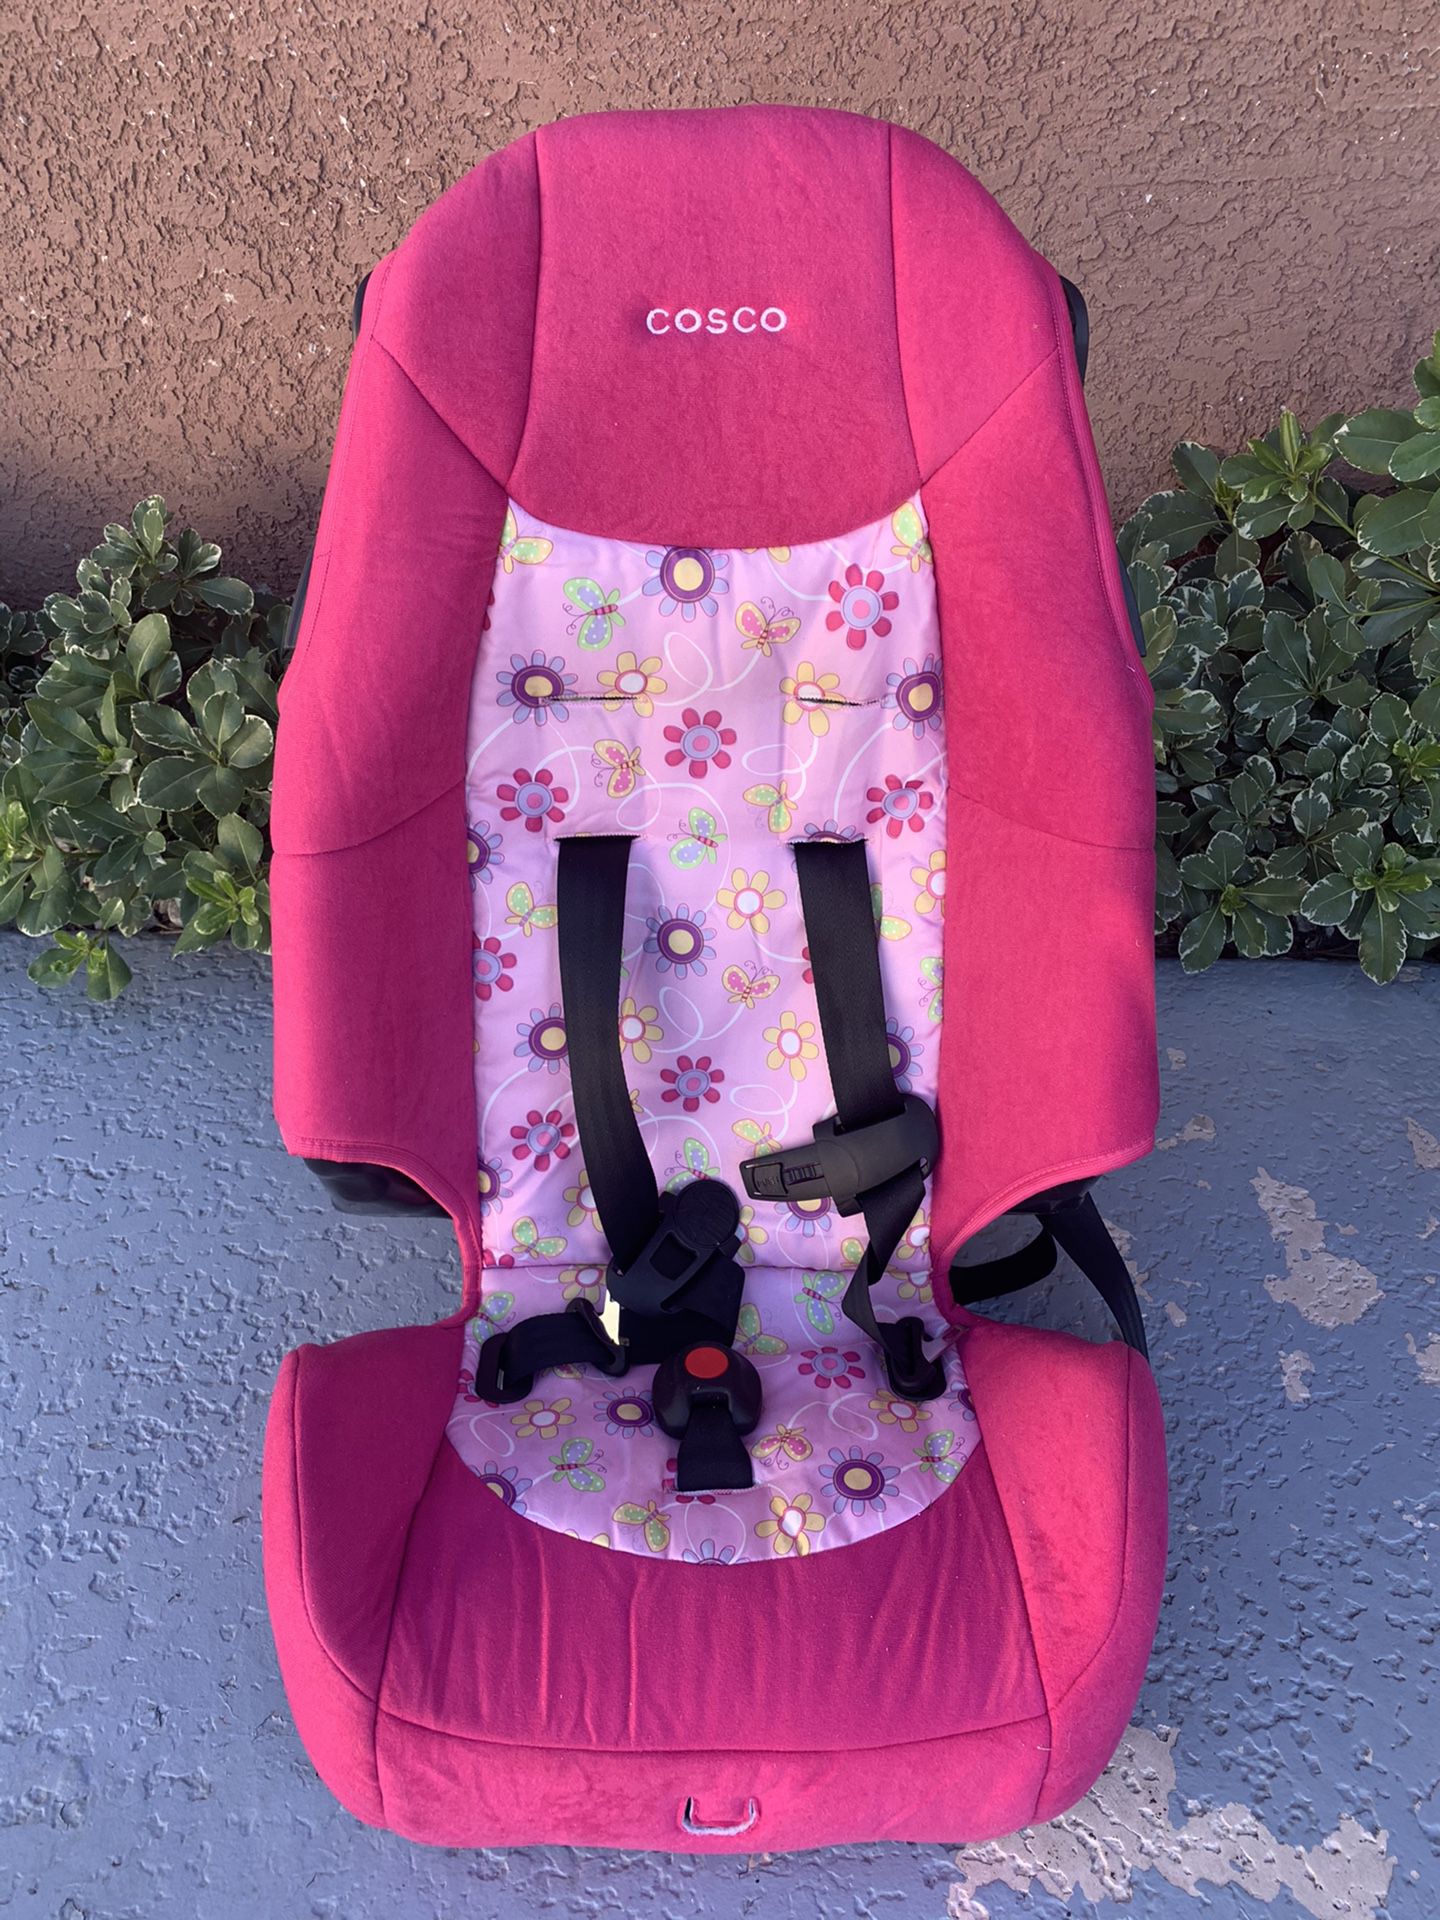 COSCO girls car seat